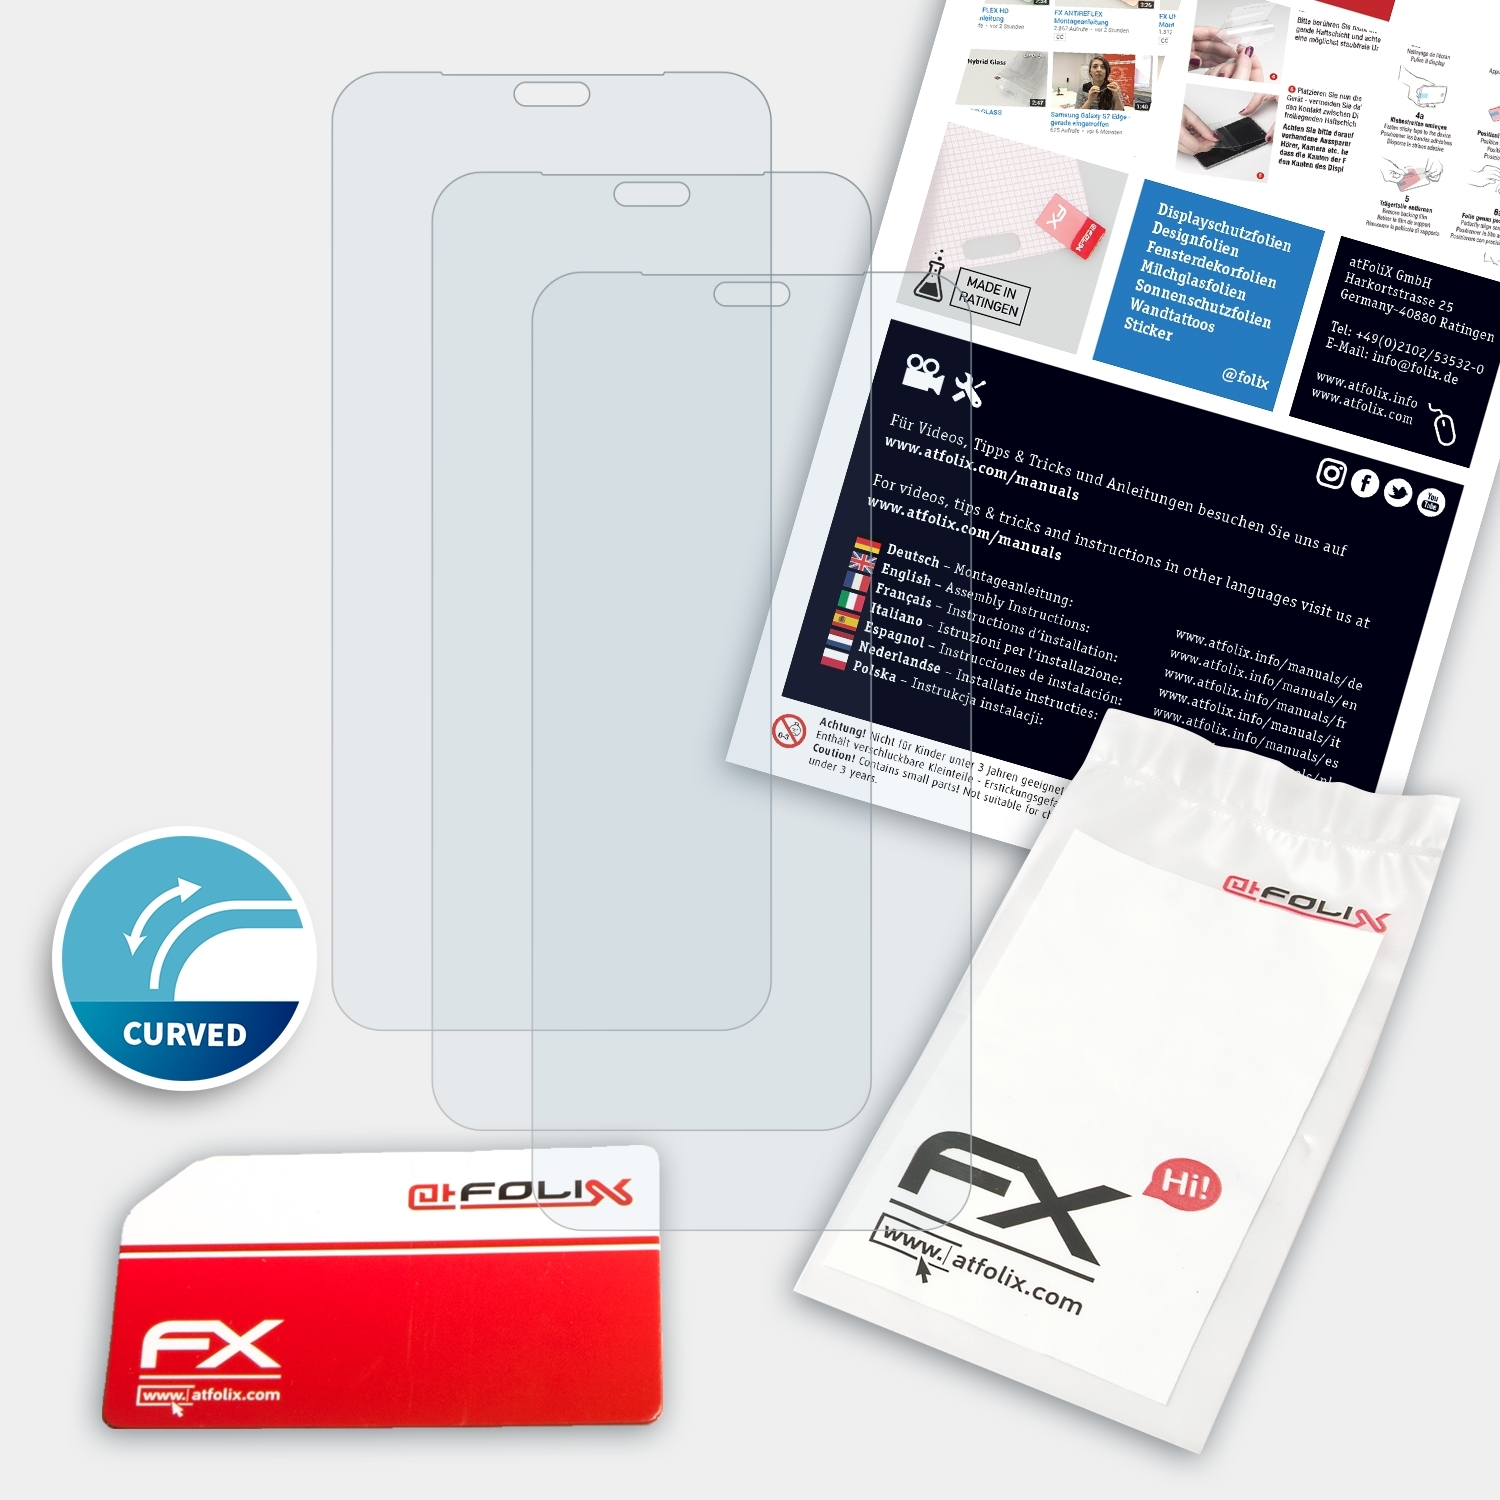 Vivo Displayschutz(für 3x ATFOLIX S9) FX-ActiFleX